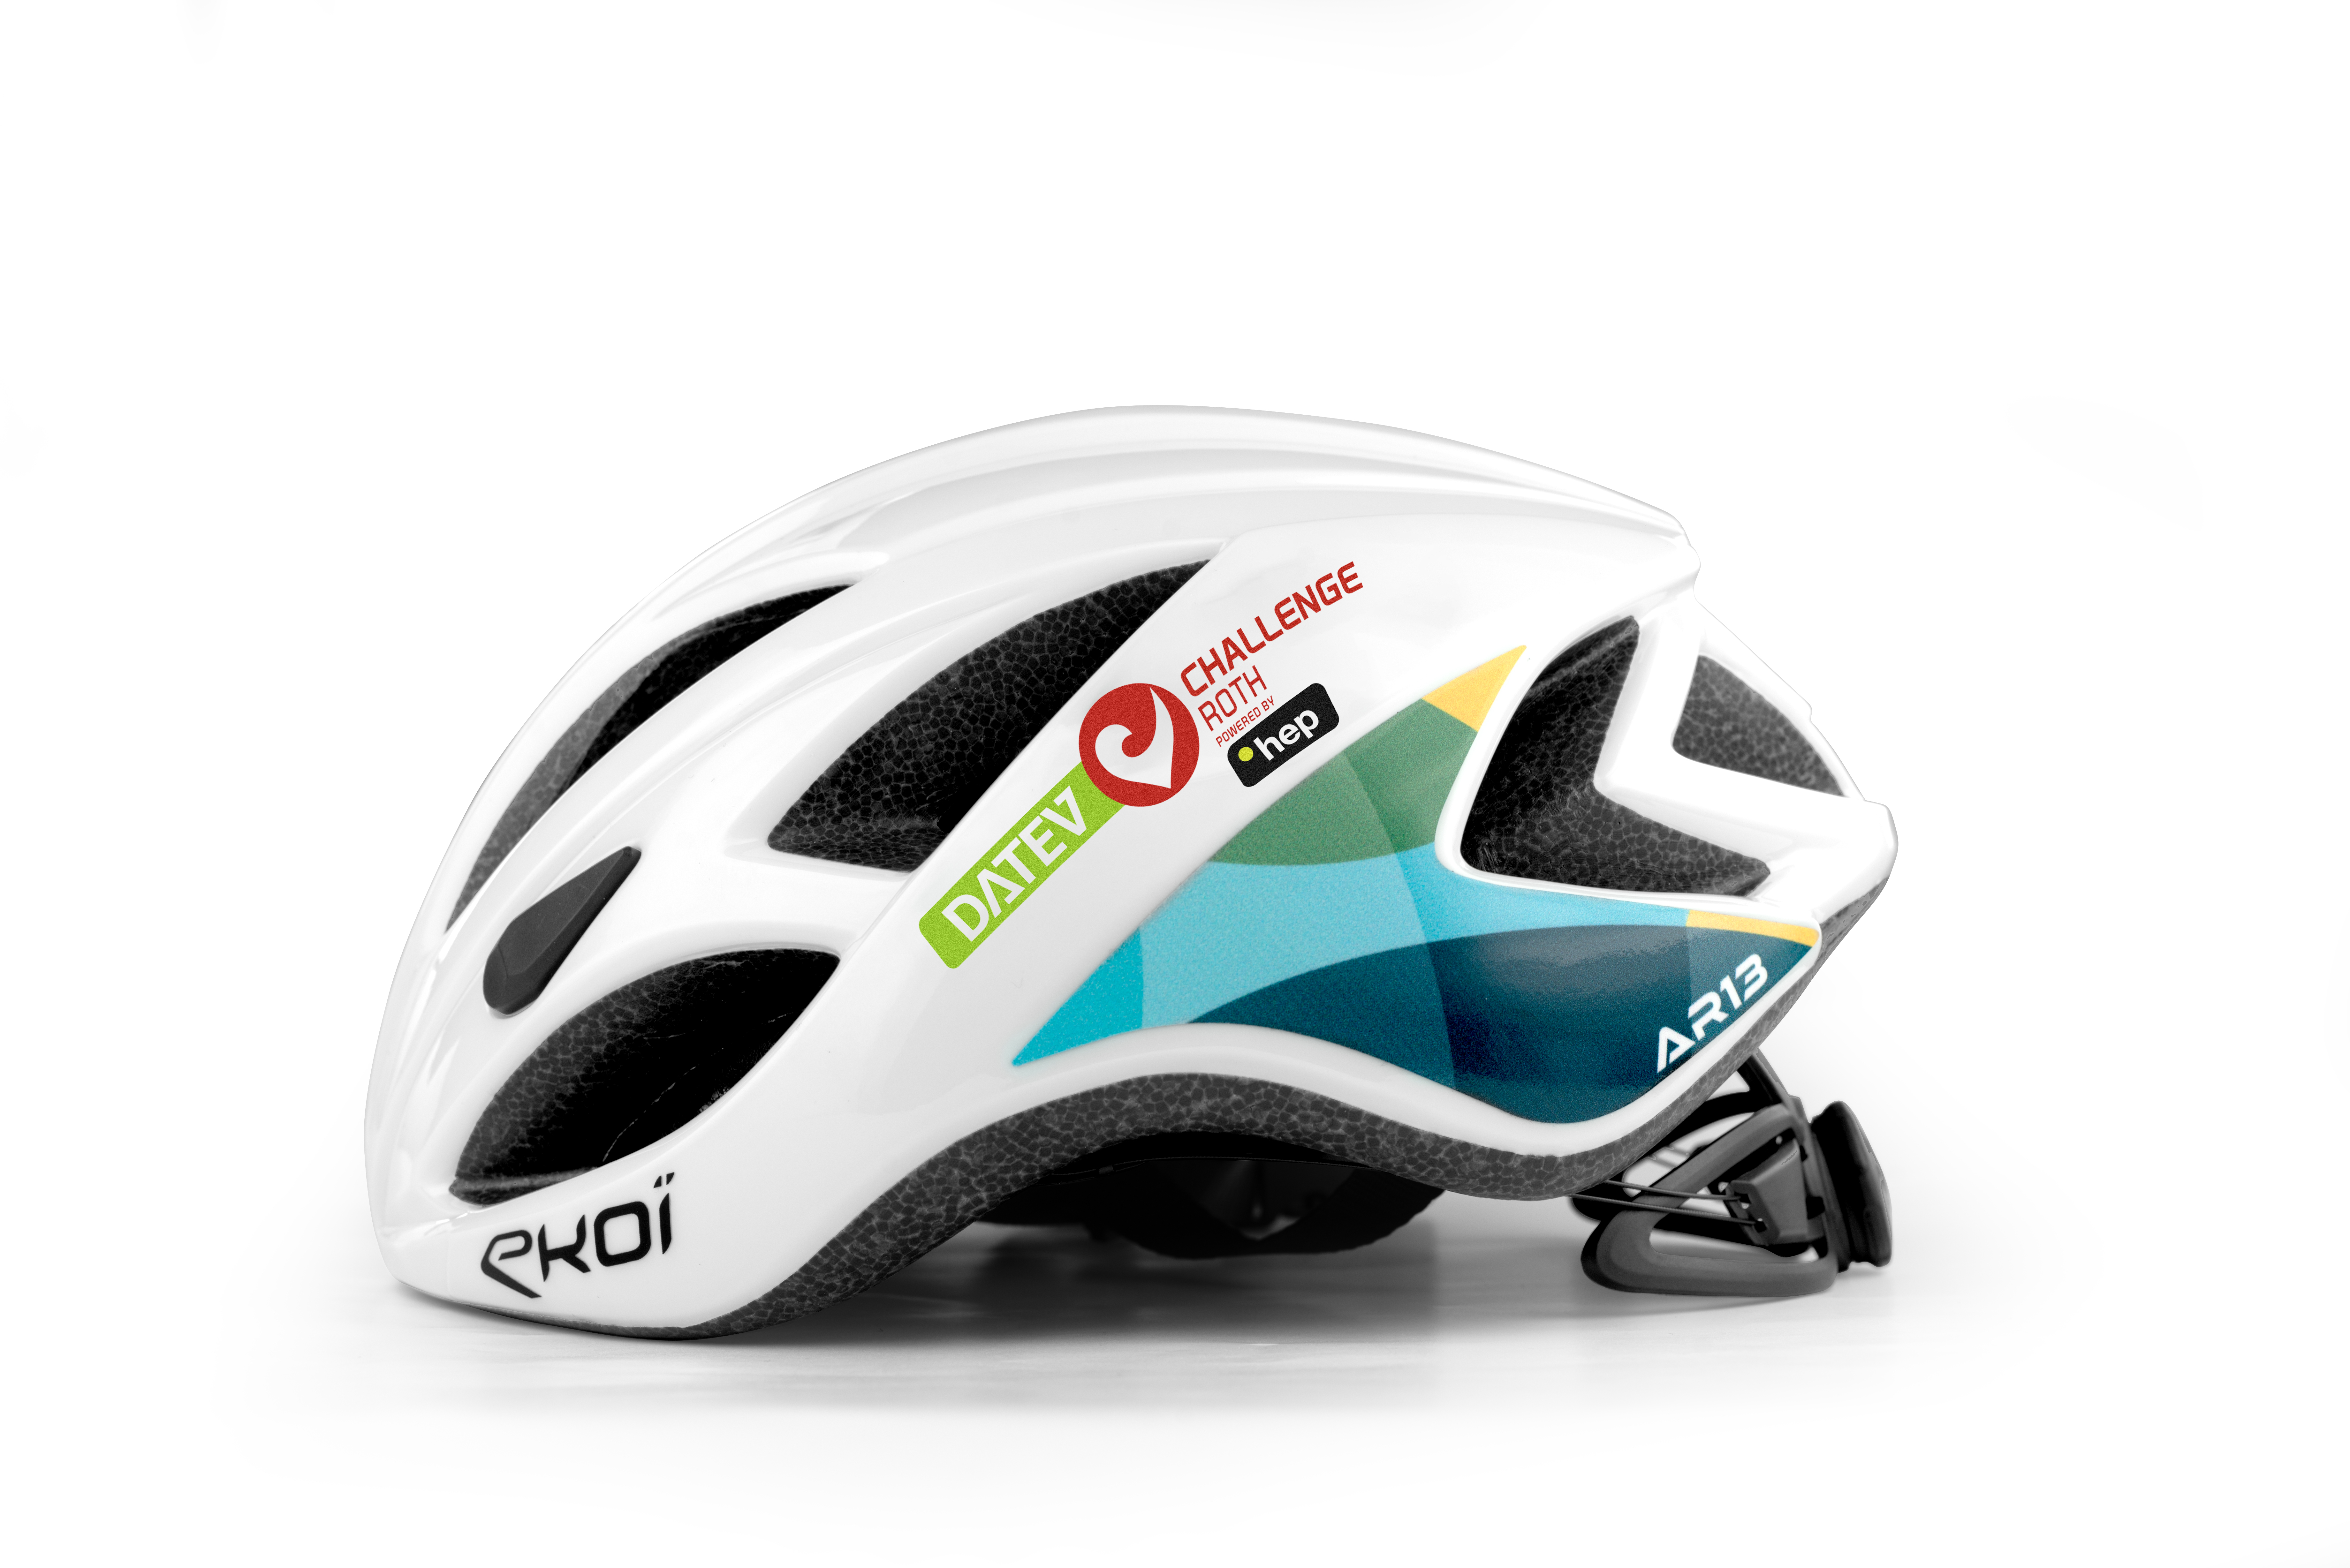 EKOI AR13 bike helmet CHALLENGE ROTH edition lightweight road bike helmet